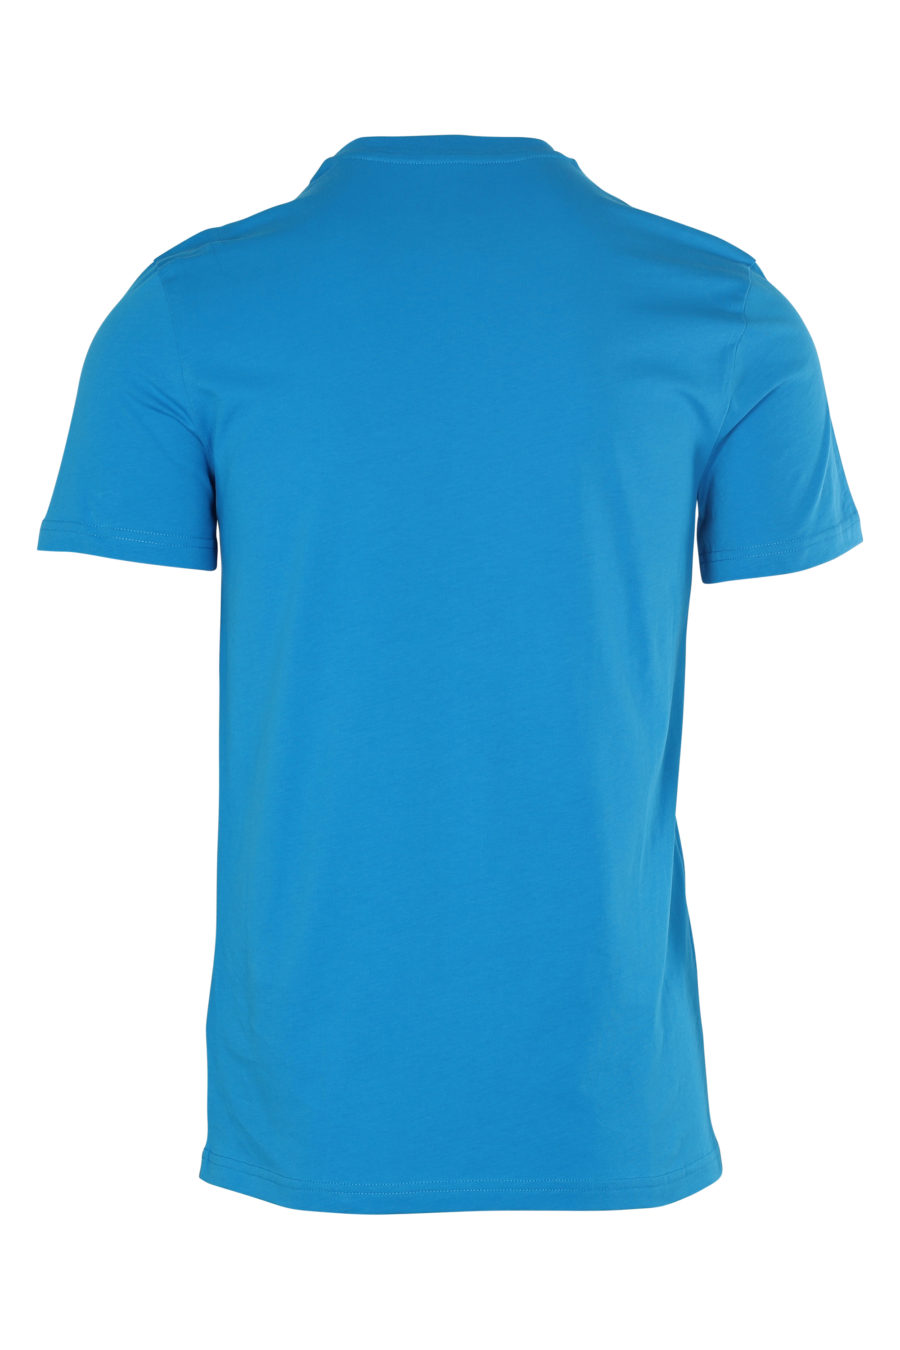 Camiseta azul con logo "Couture" - IMG 6117